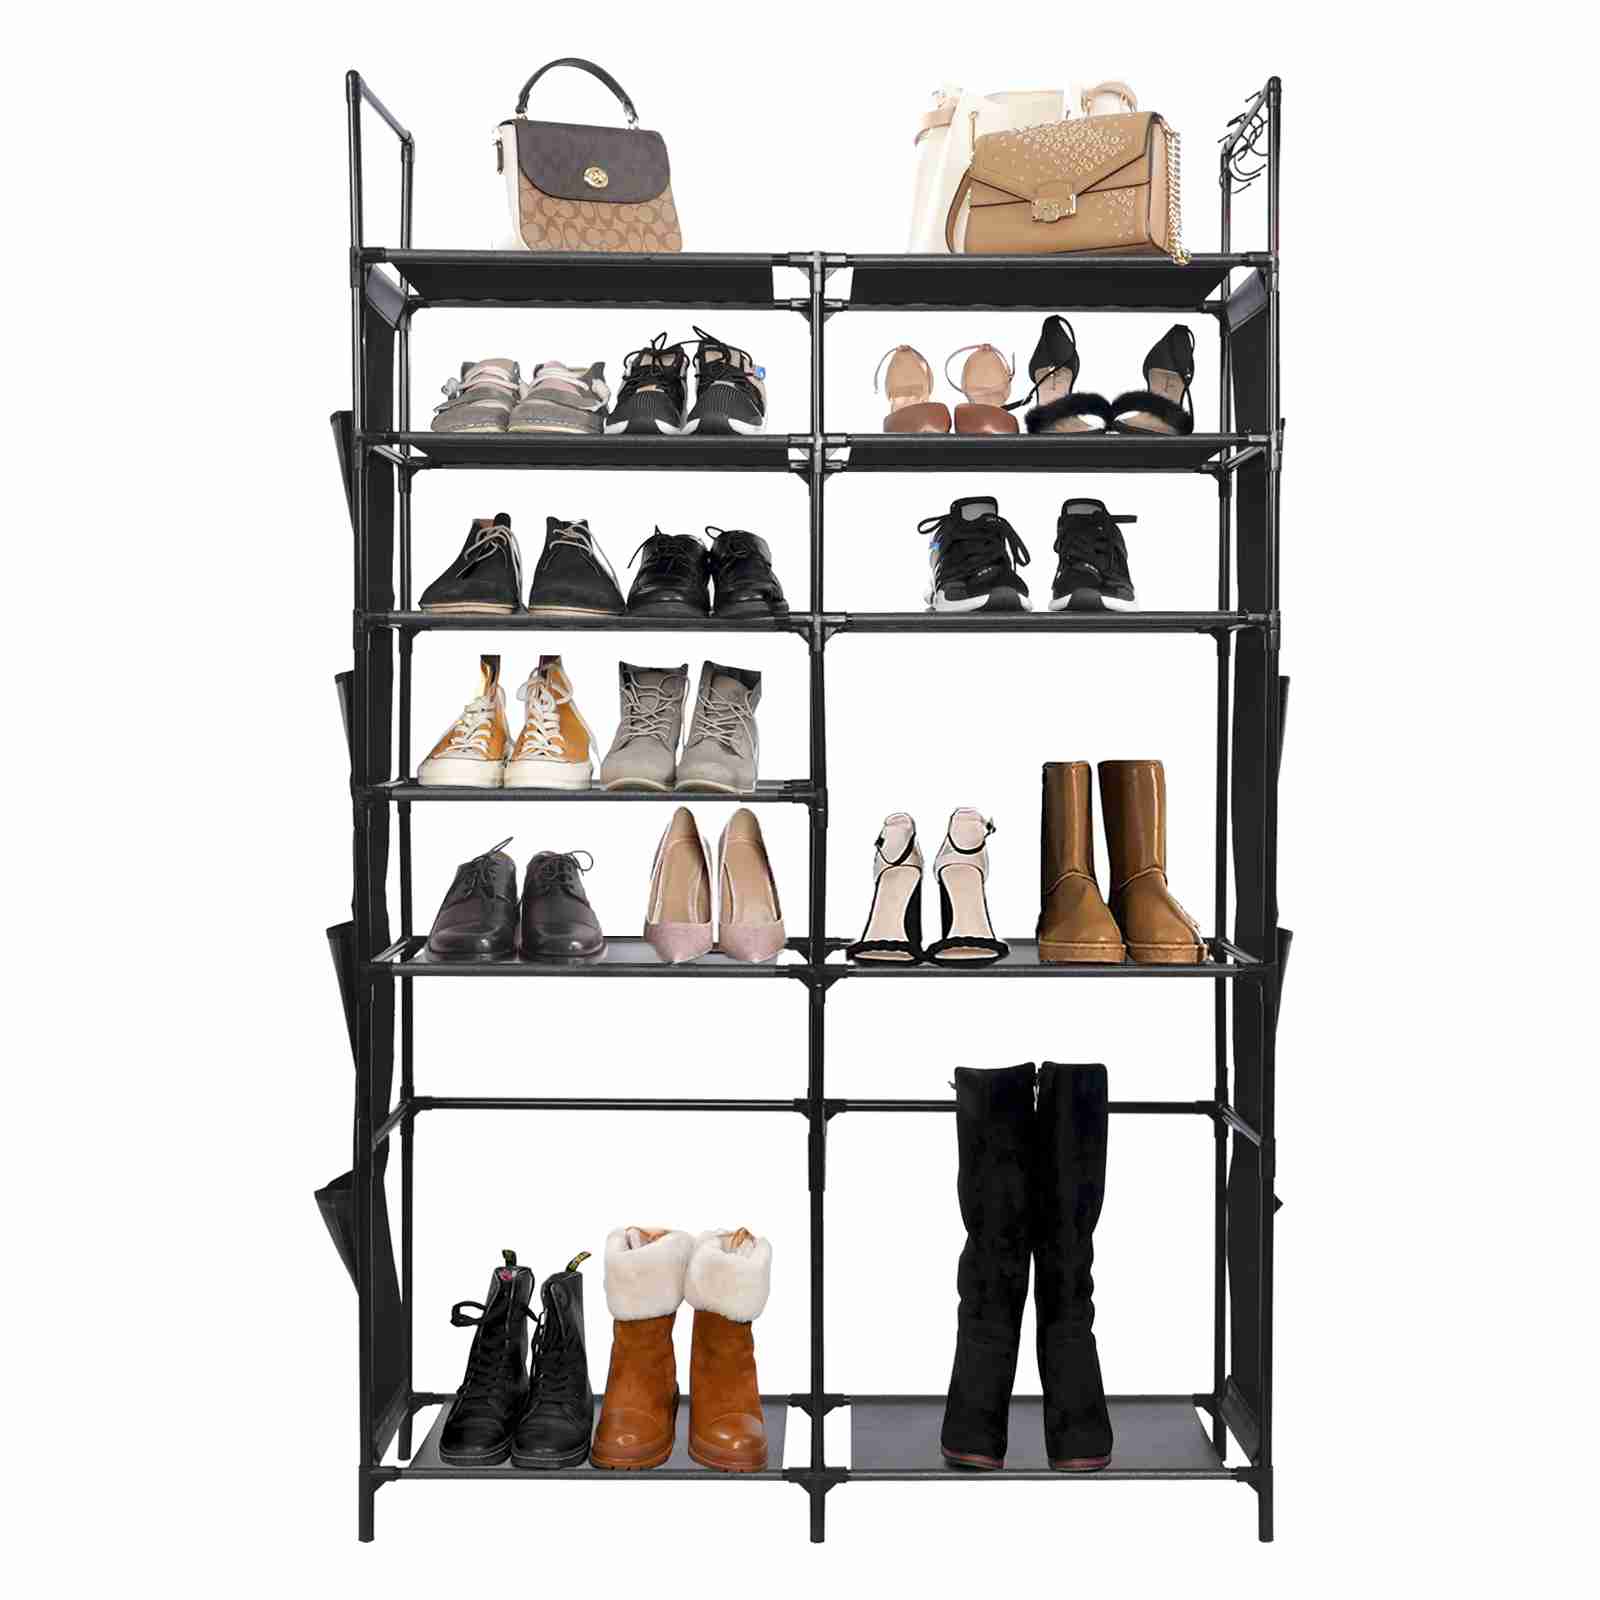 shoe-rack-shoe-organizer-storage-for-closet-entryway-bedroom with cash back rebate